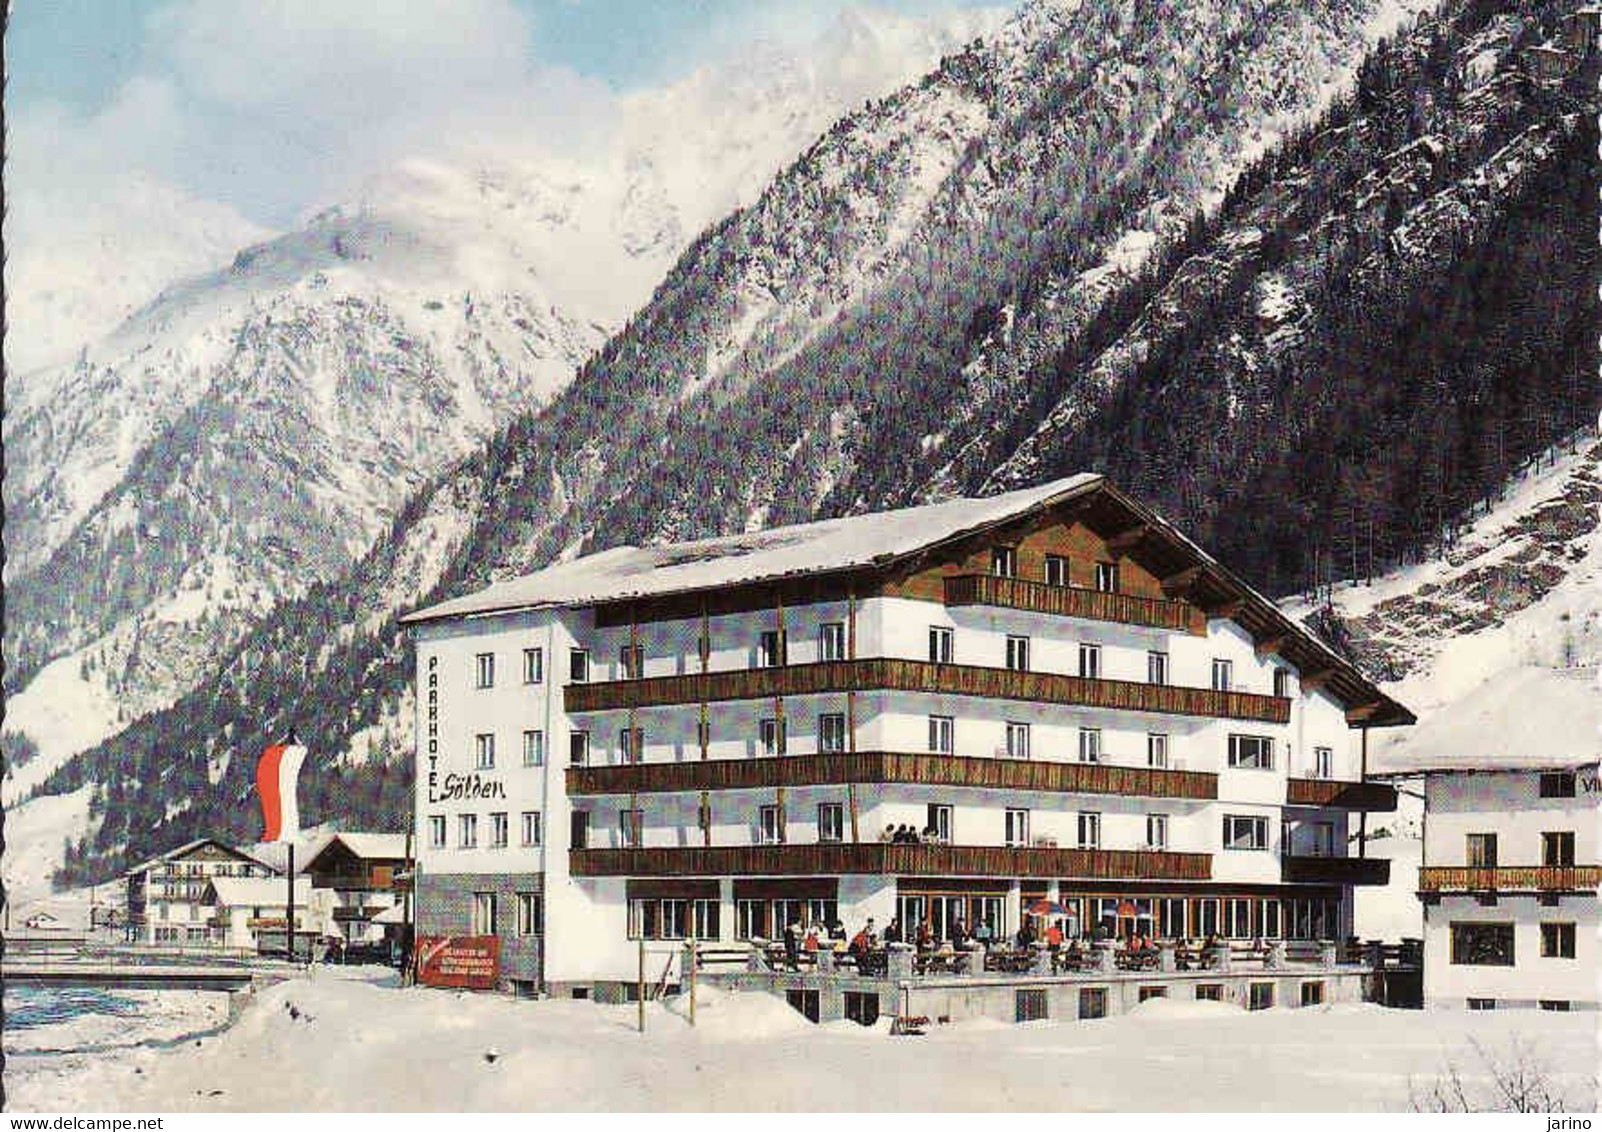 Austria,  Tirol > Parkhotel Sölden, Sölden  Oetztal Bezirk Imst, Used - Sölden